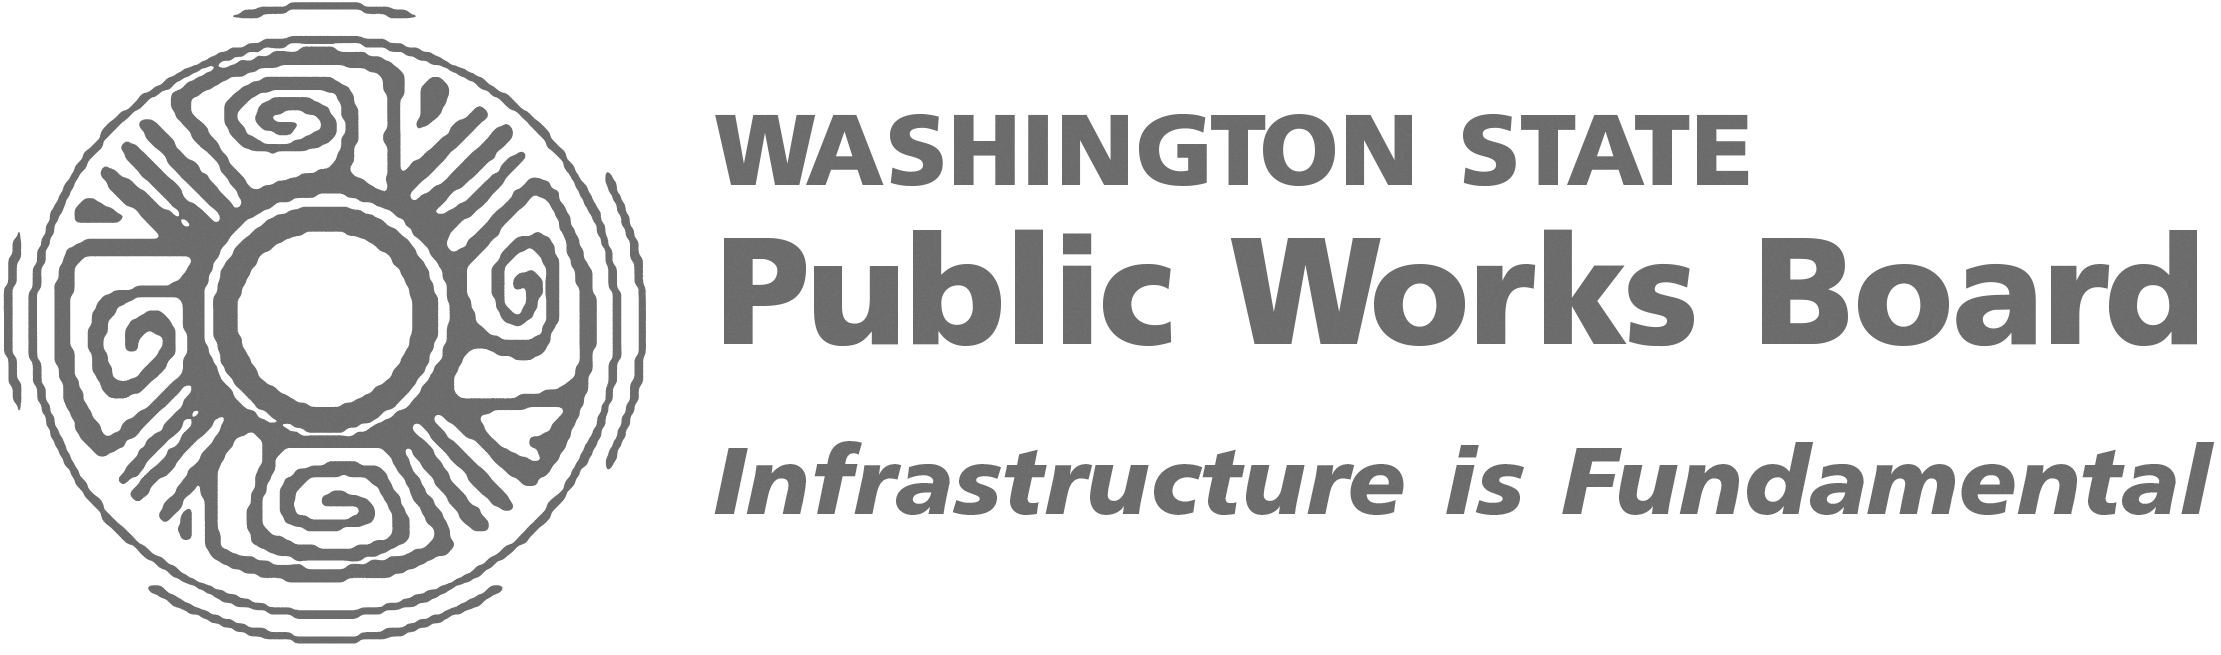 State Public Works Board announces June broadband infrastructure webinars